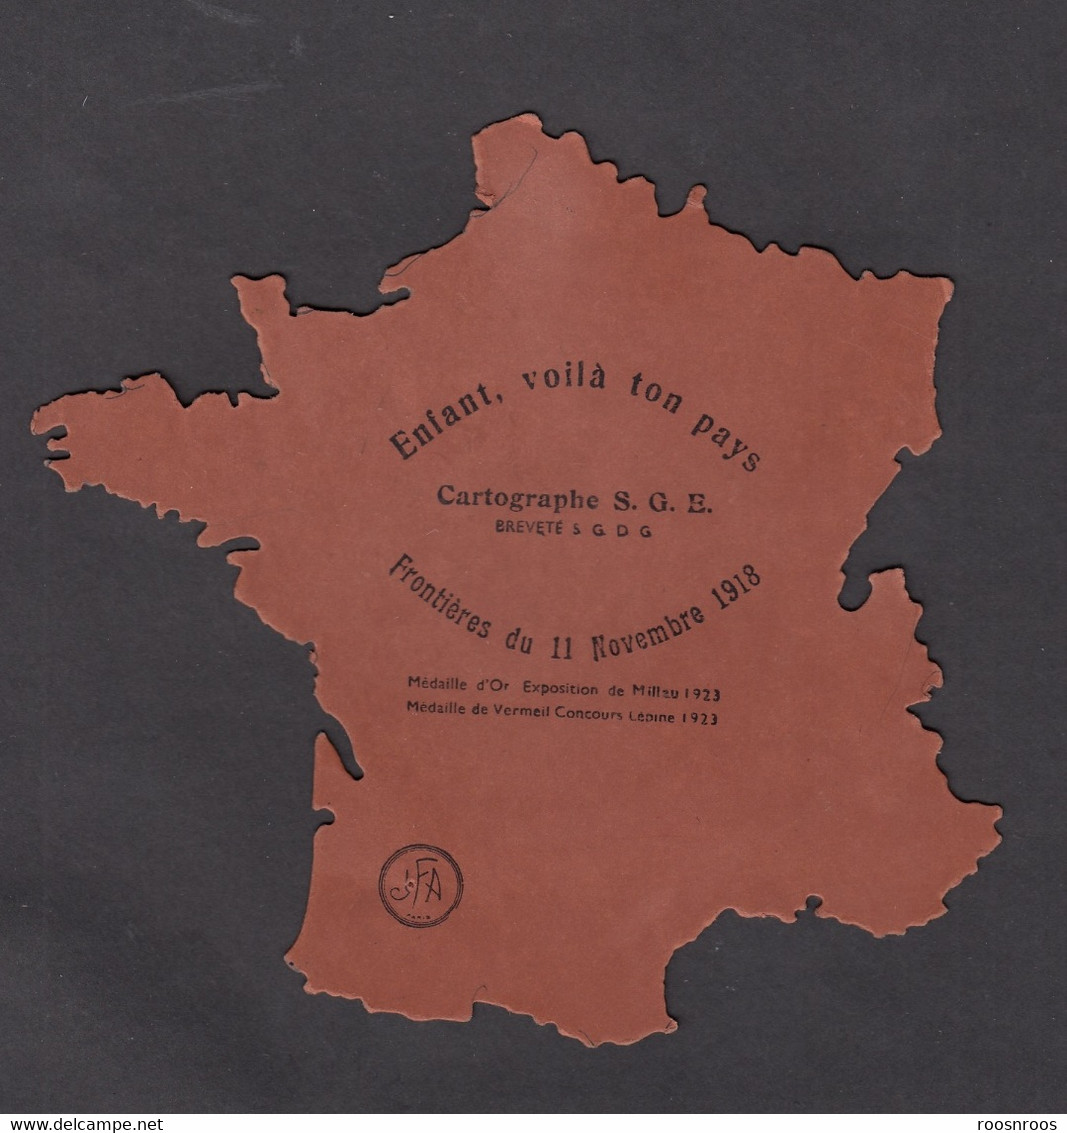 CARTOGRAPHE S.G.E - JFA PARIS - CARTE DE FRANCE - Material Und Zubehör